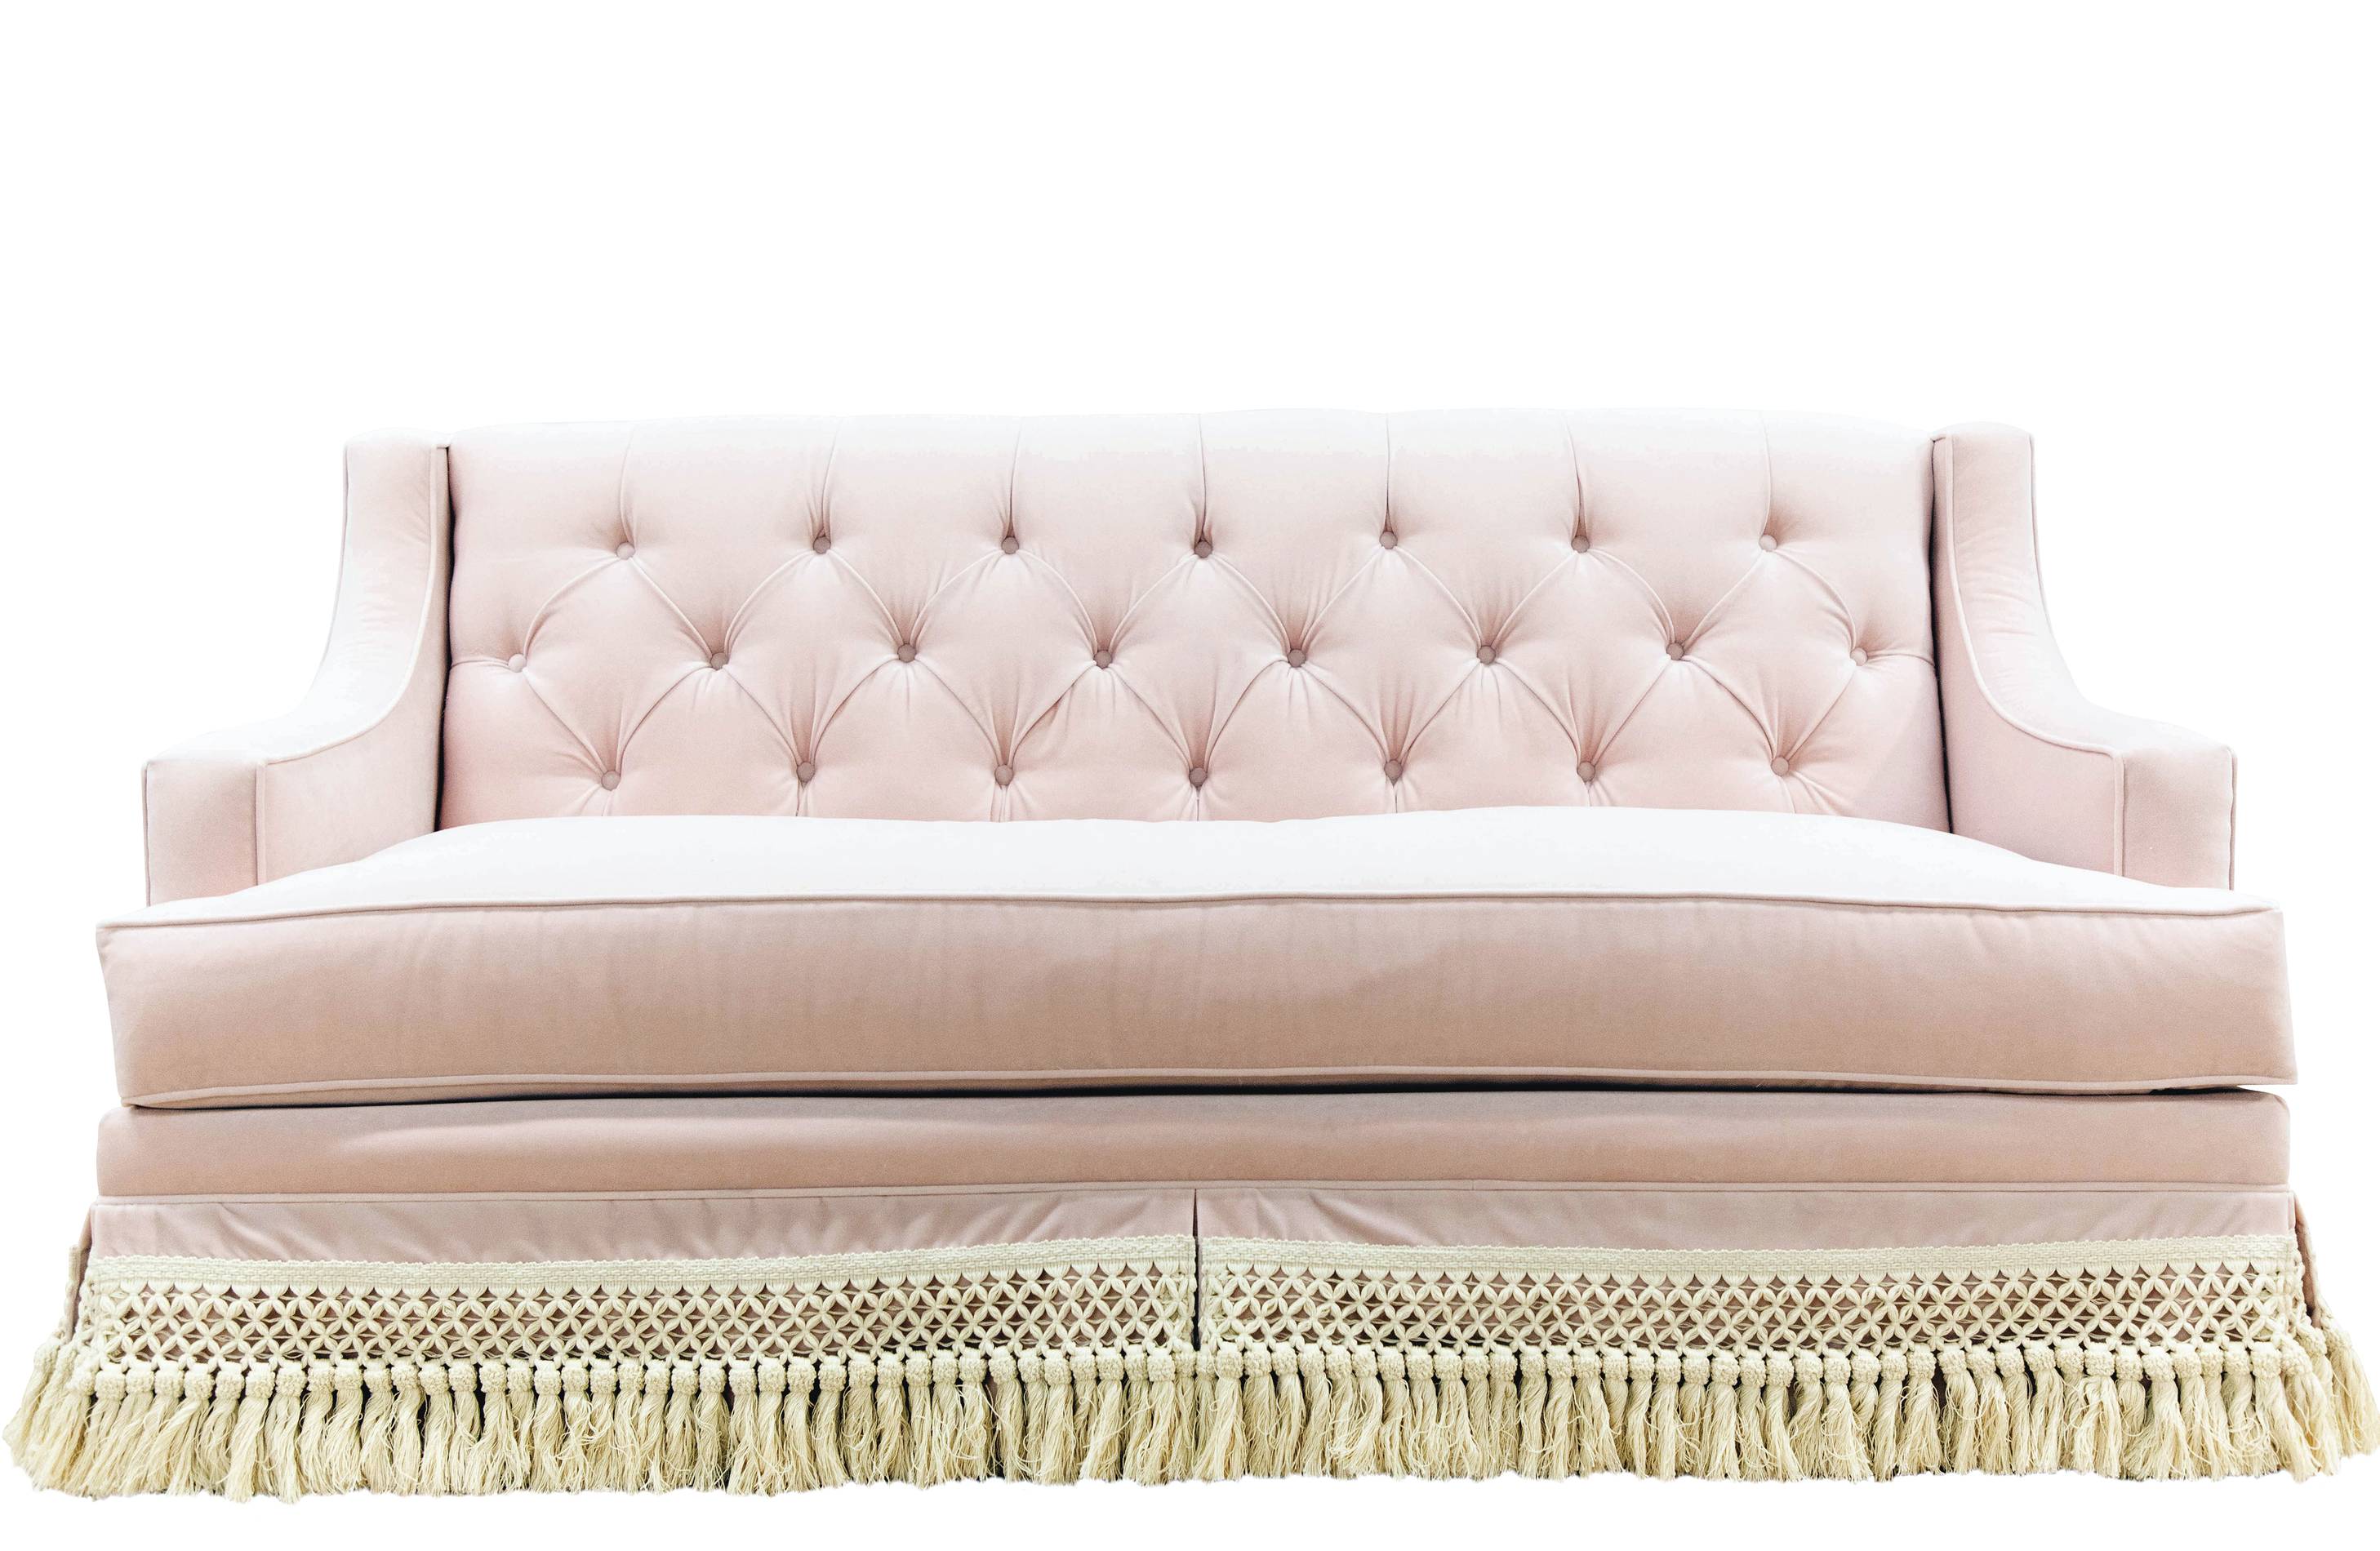 Society Social Monroe tassel sofa